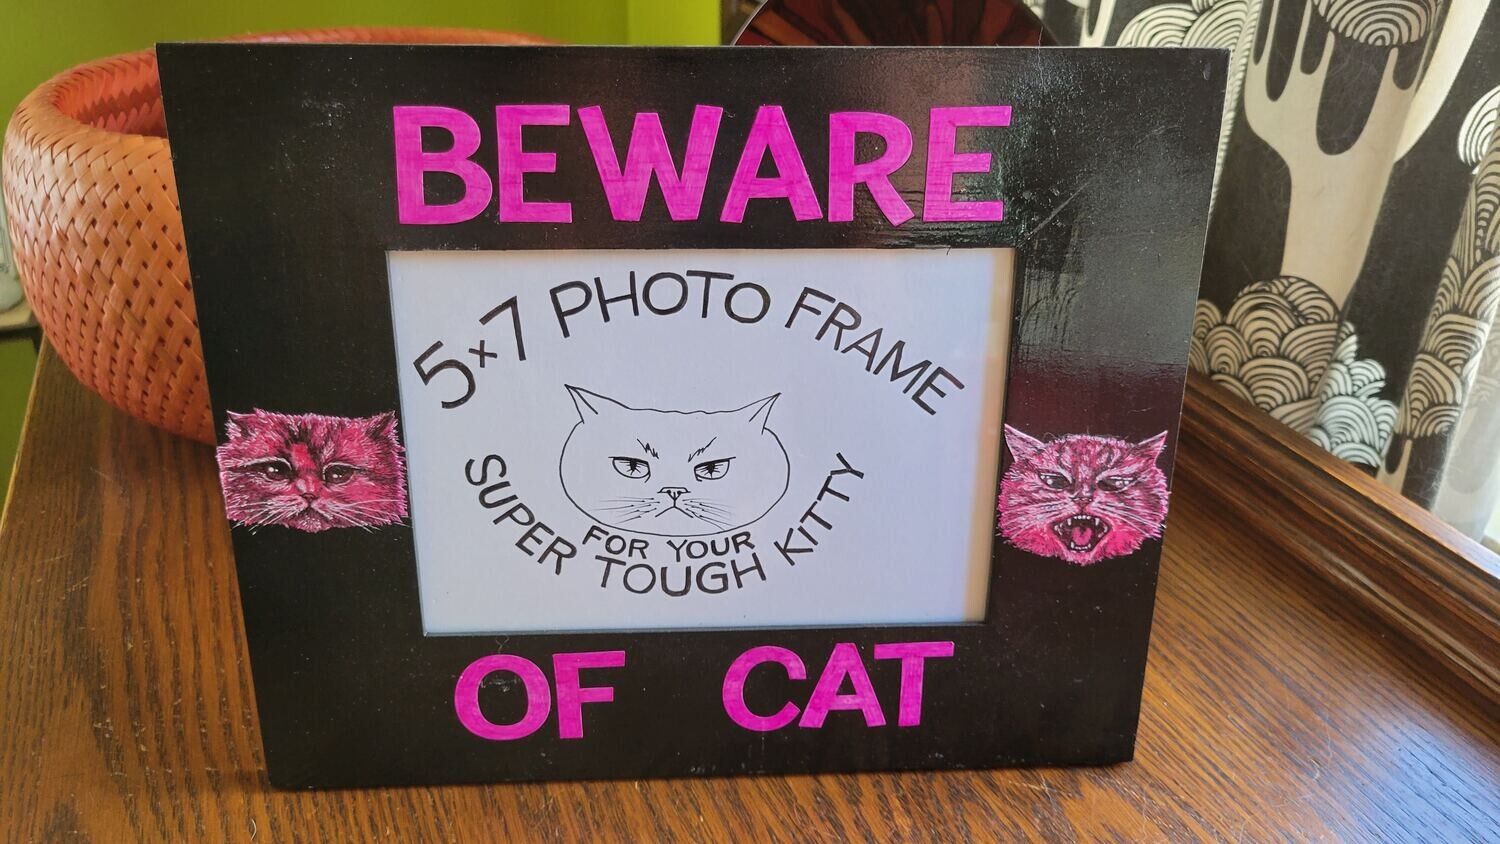 Beware of Cat, 5x7 photo frame